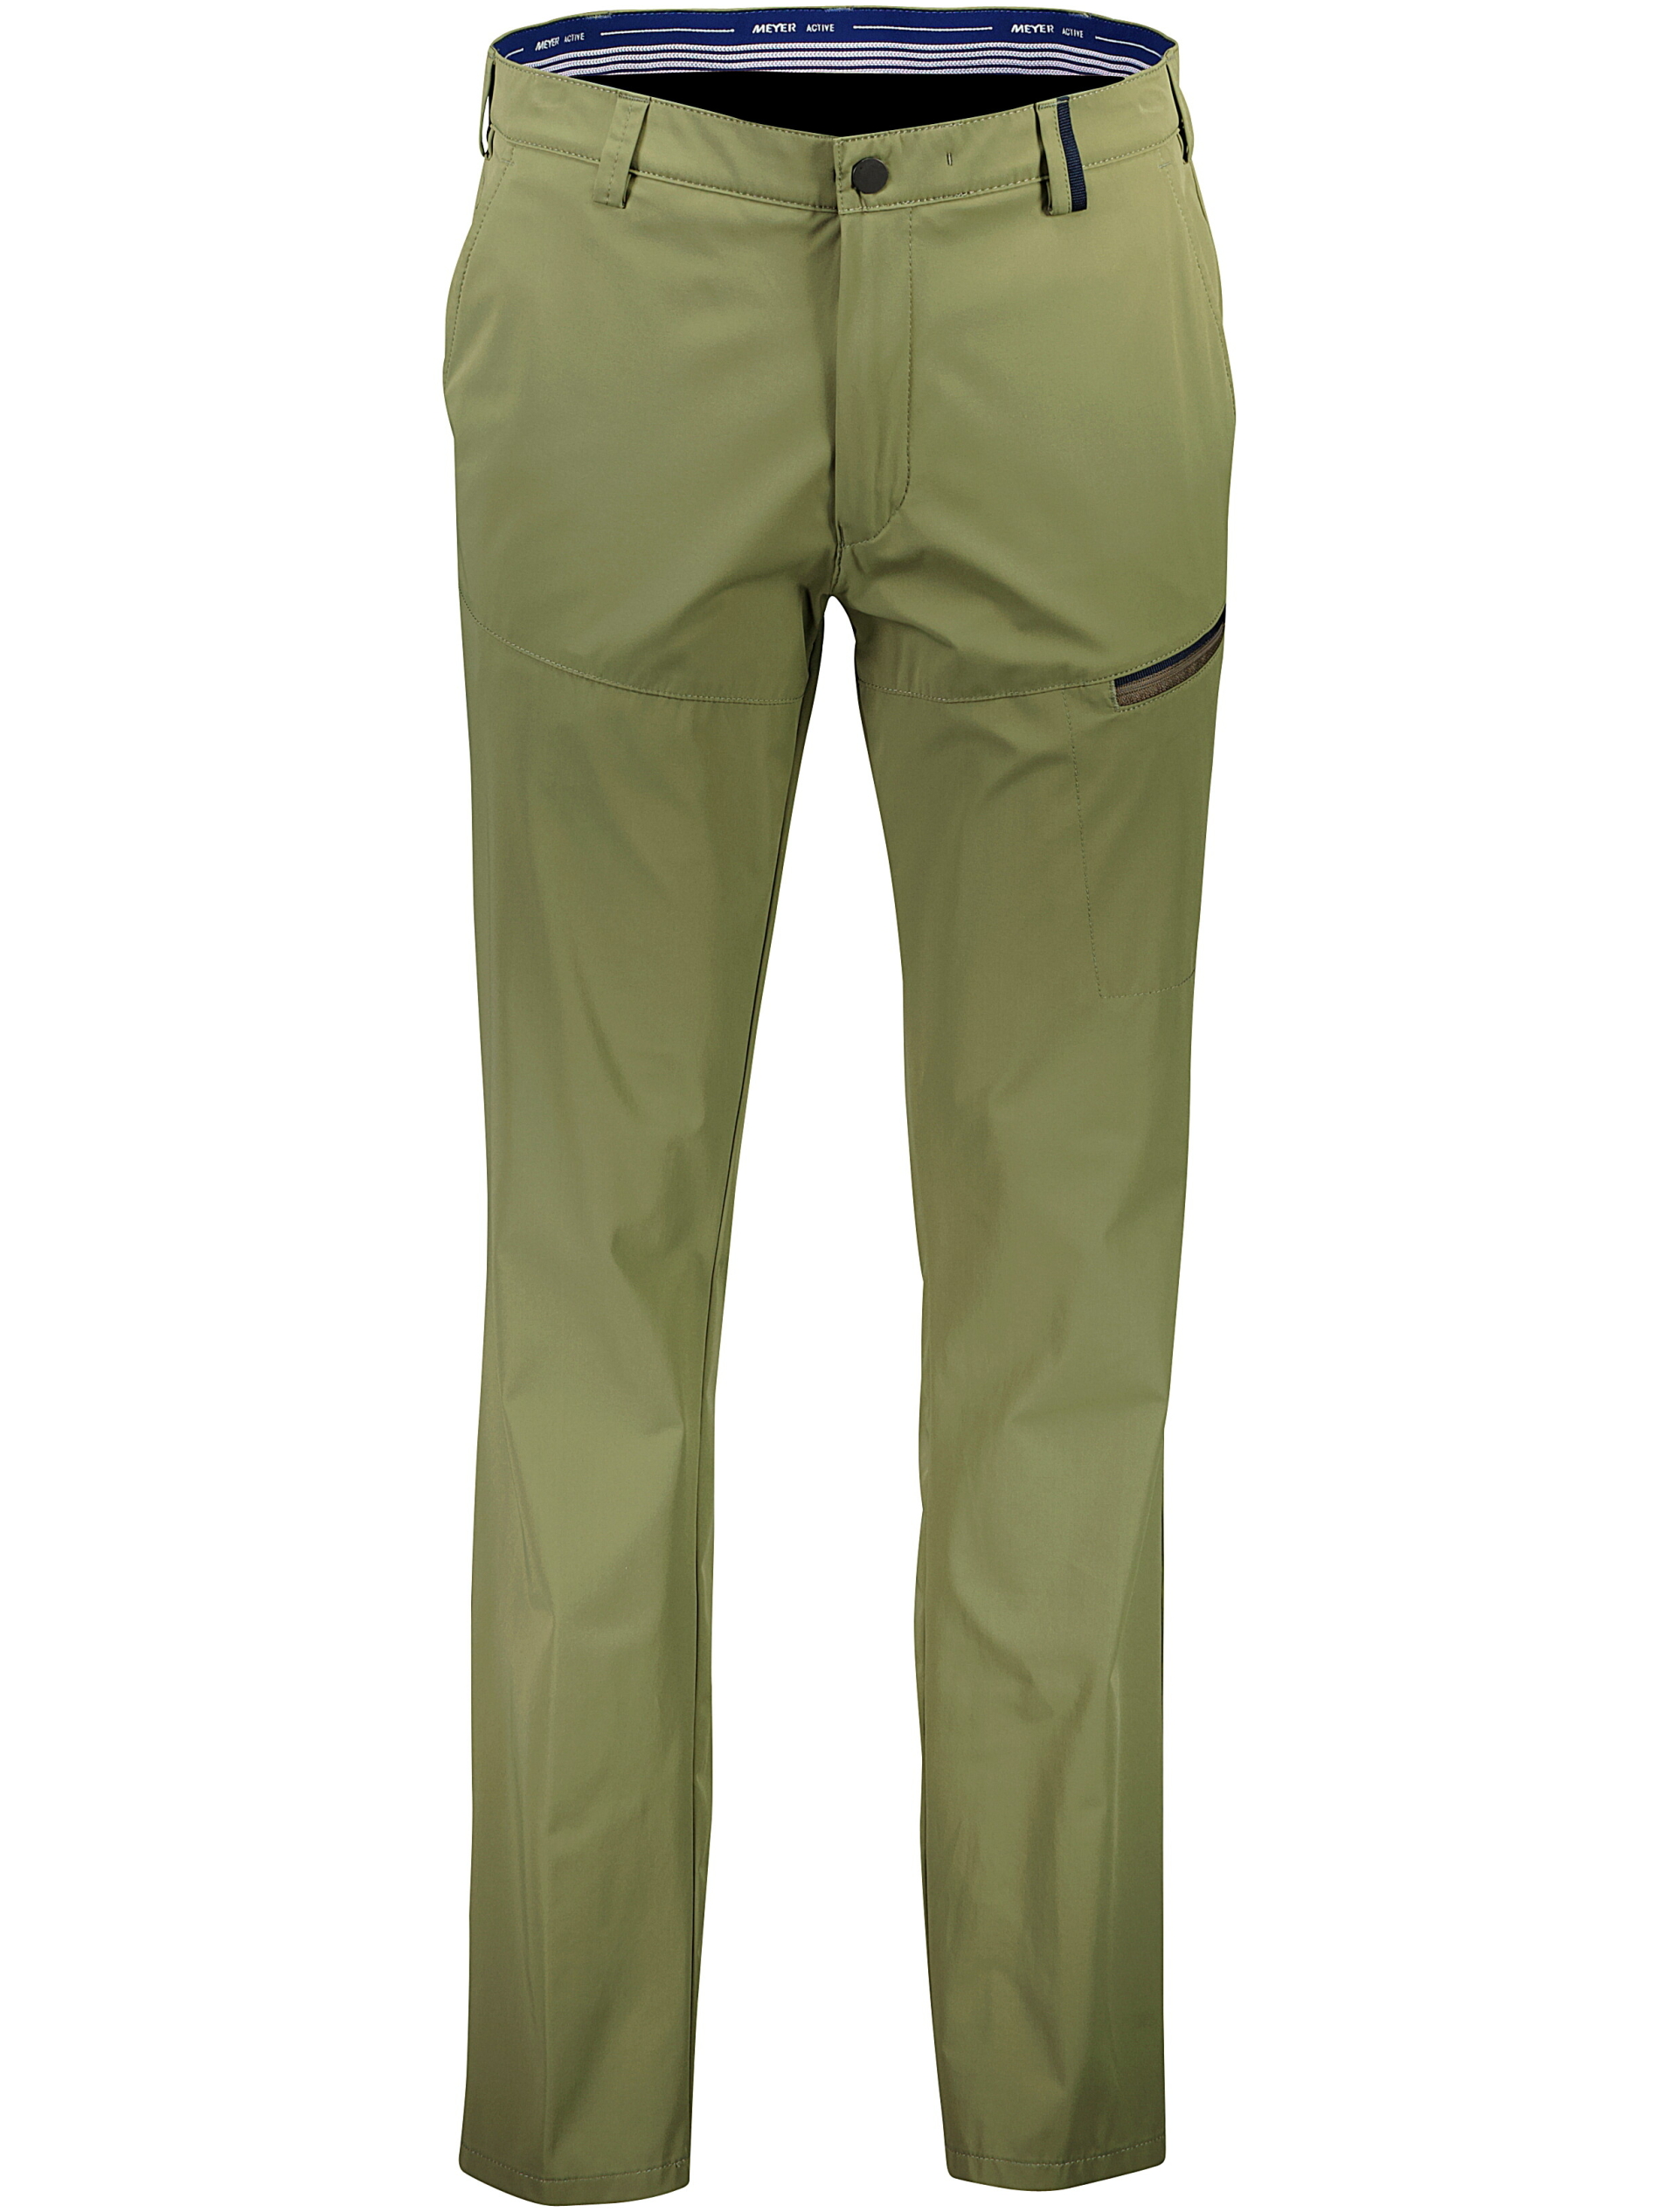 Meyer Casual bukser grøn / 25 khaki